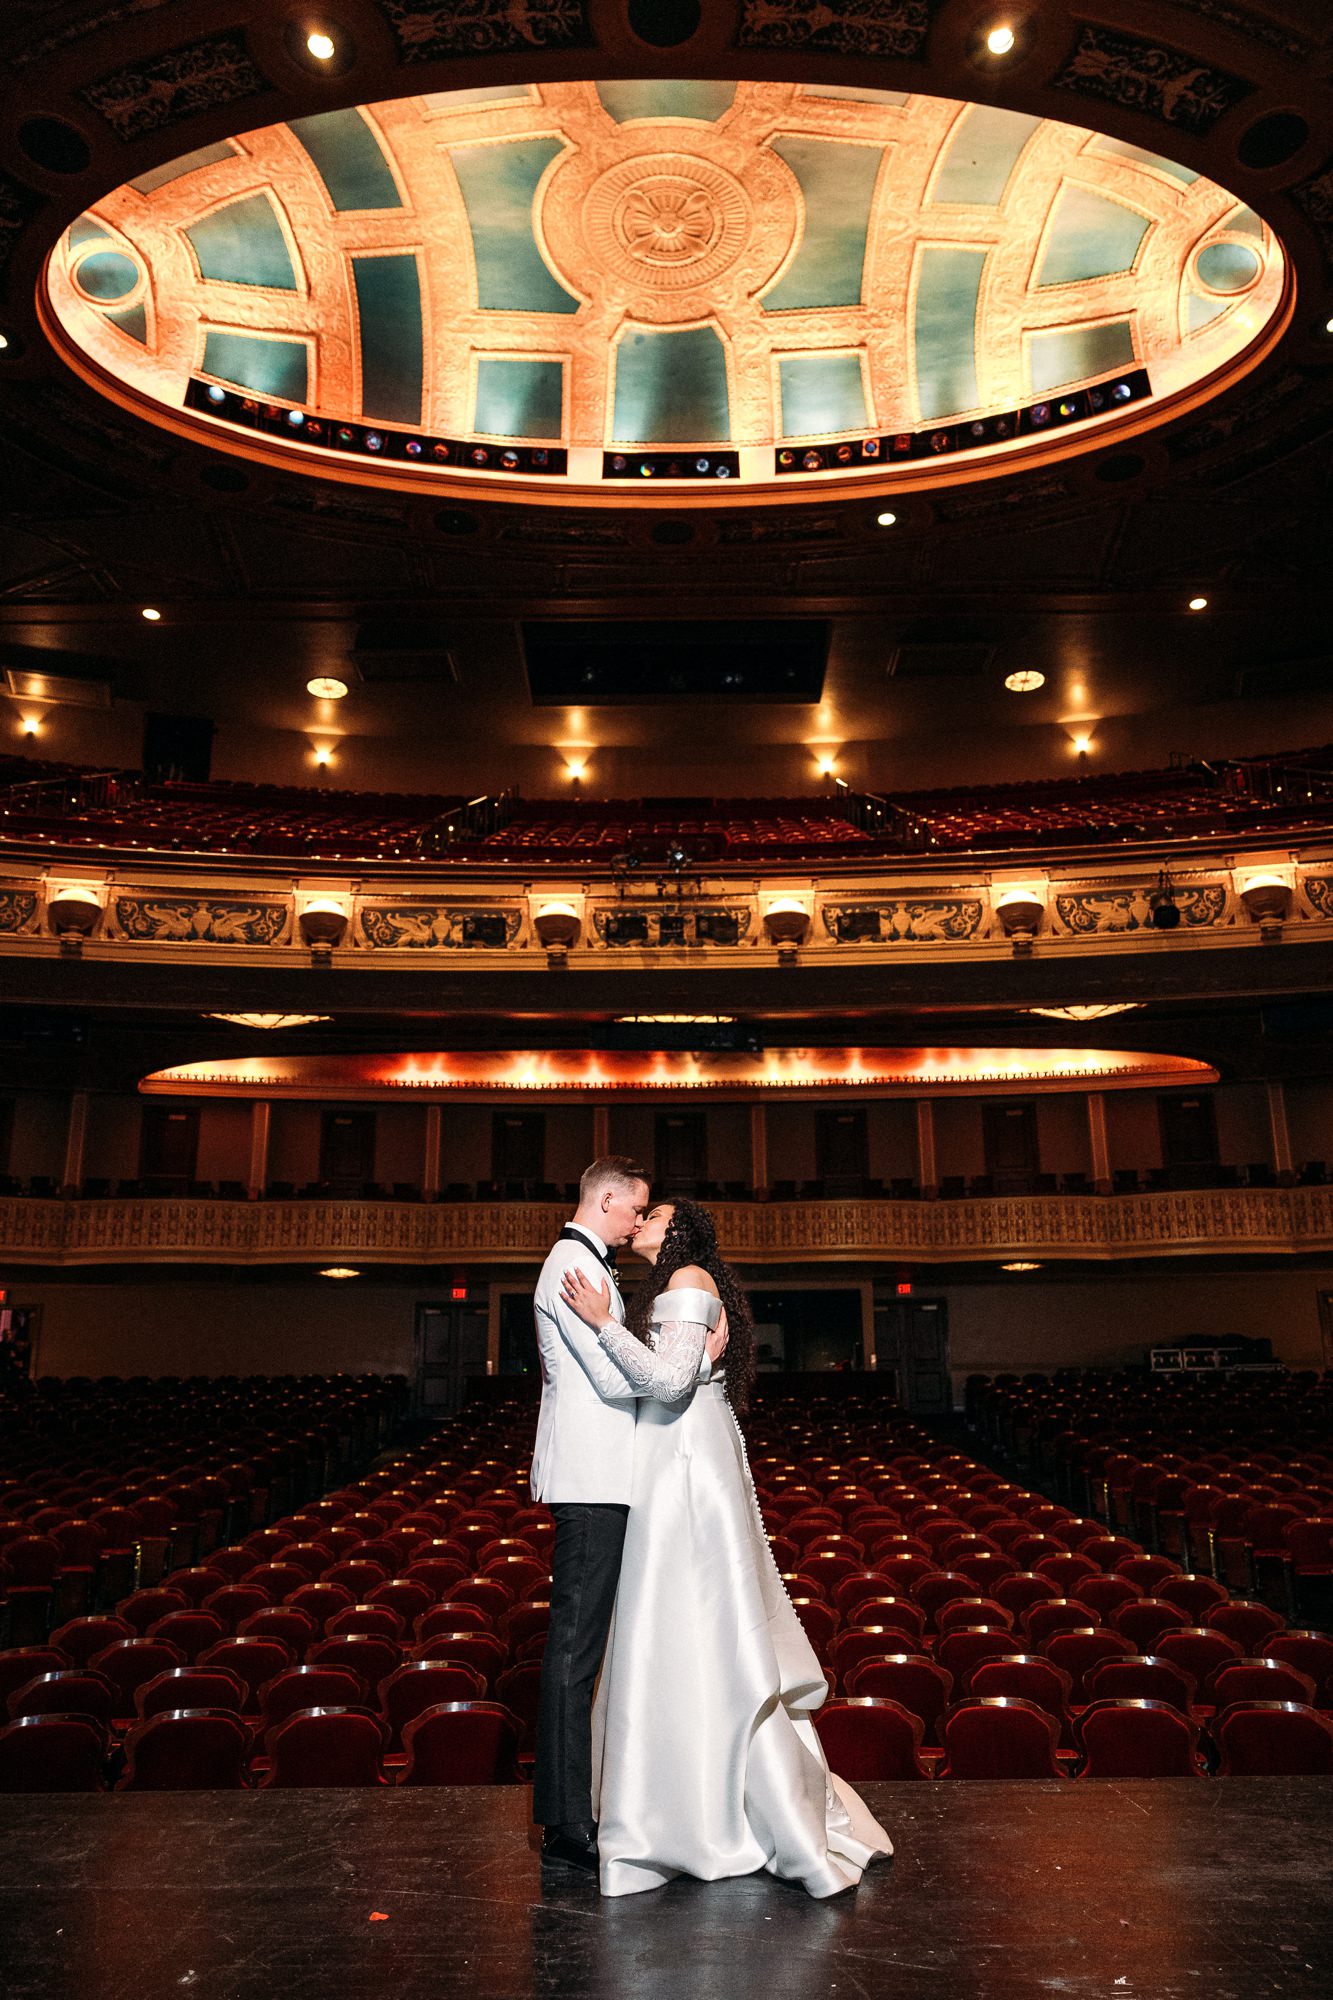 Detroit Opera House Wedding, Detroit Opera House Wedding Venue, Detroit Opera House Wedding Photos, Detroit Wedding Photographers